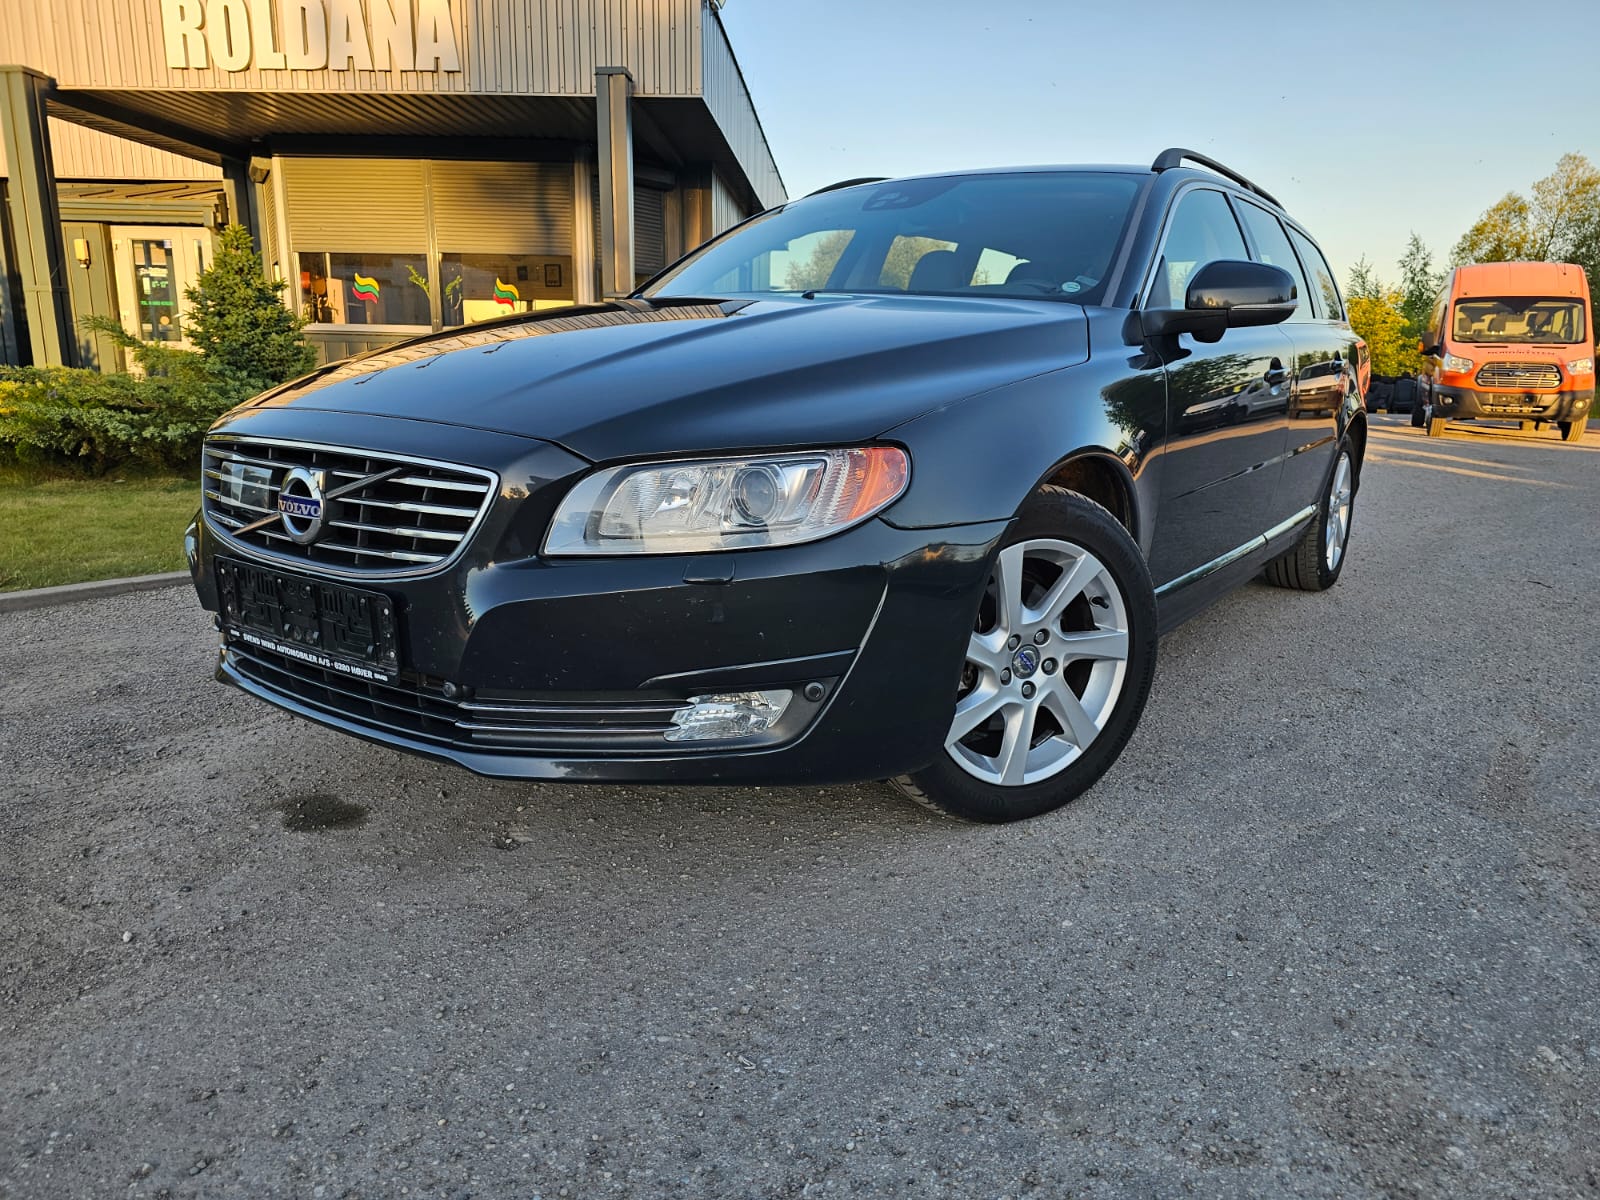 Volvo V70, 2.0 l., wagon, 2014-07/naudoti automobiliai/Roldana